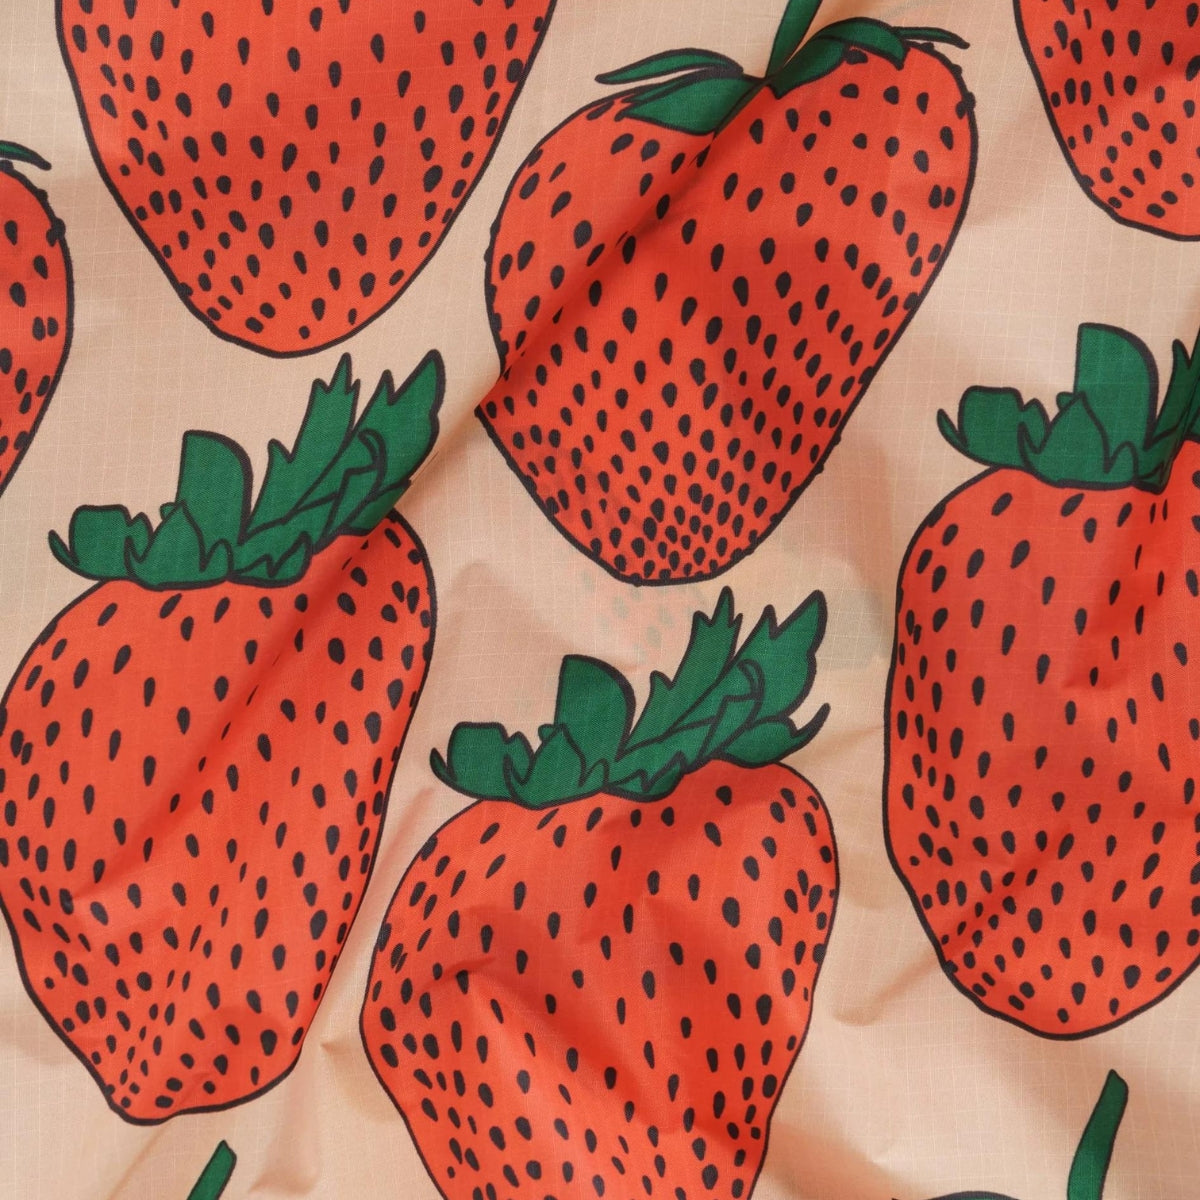 Baggu Standard Bag in Strawberry